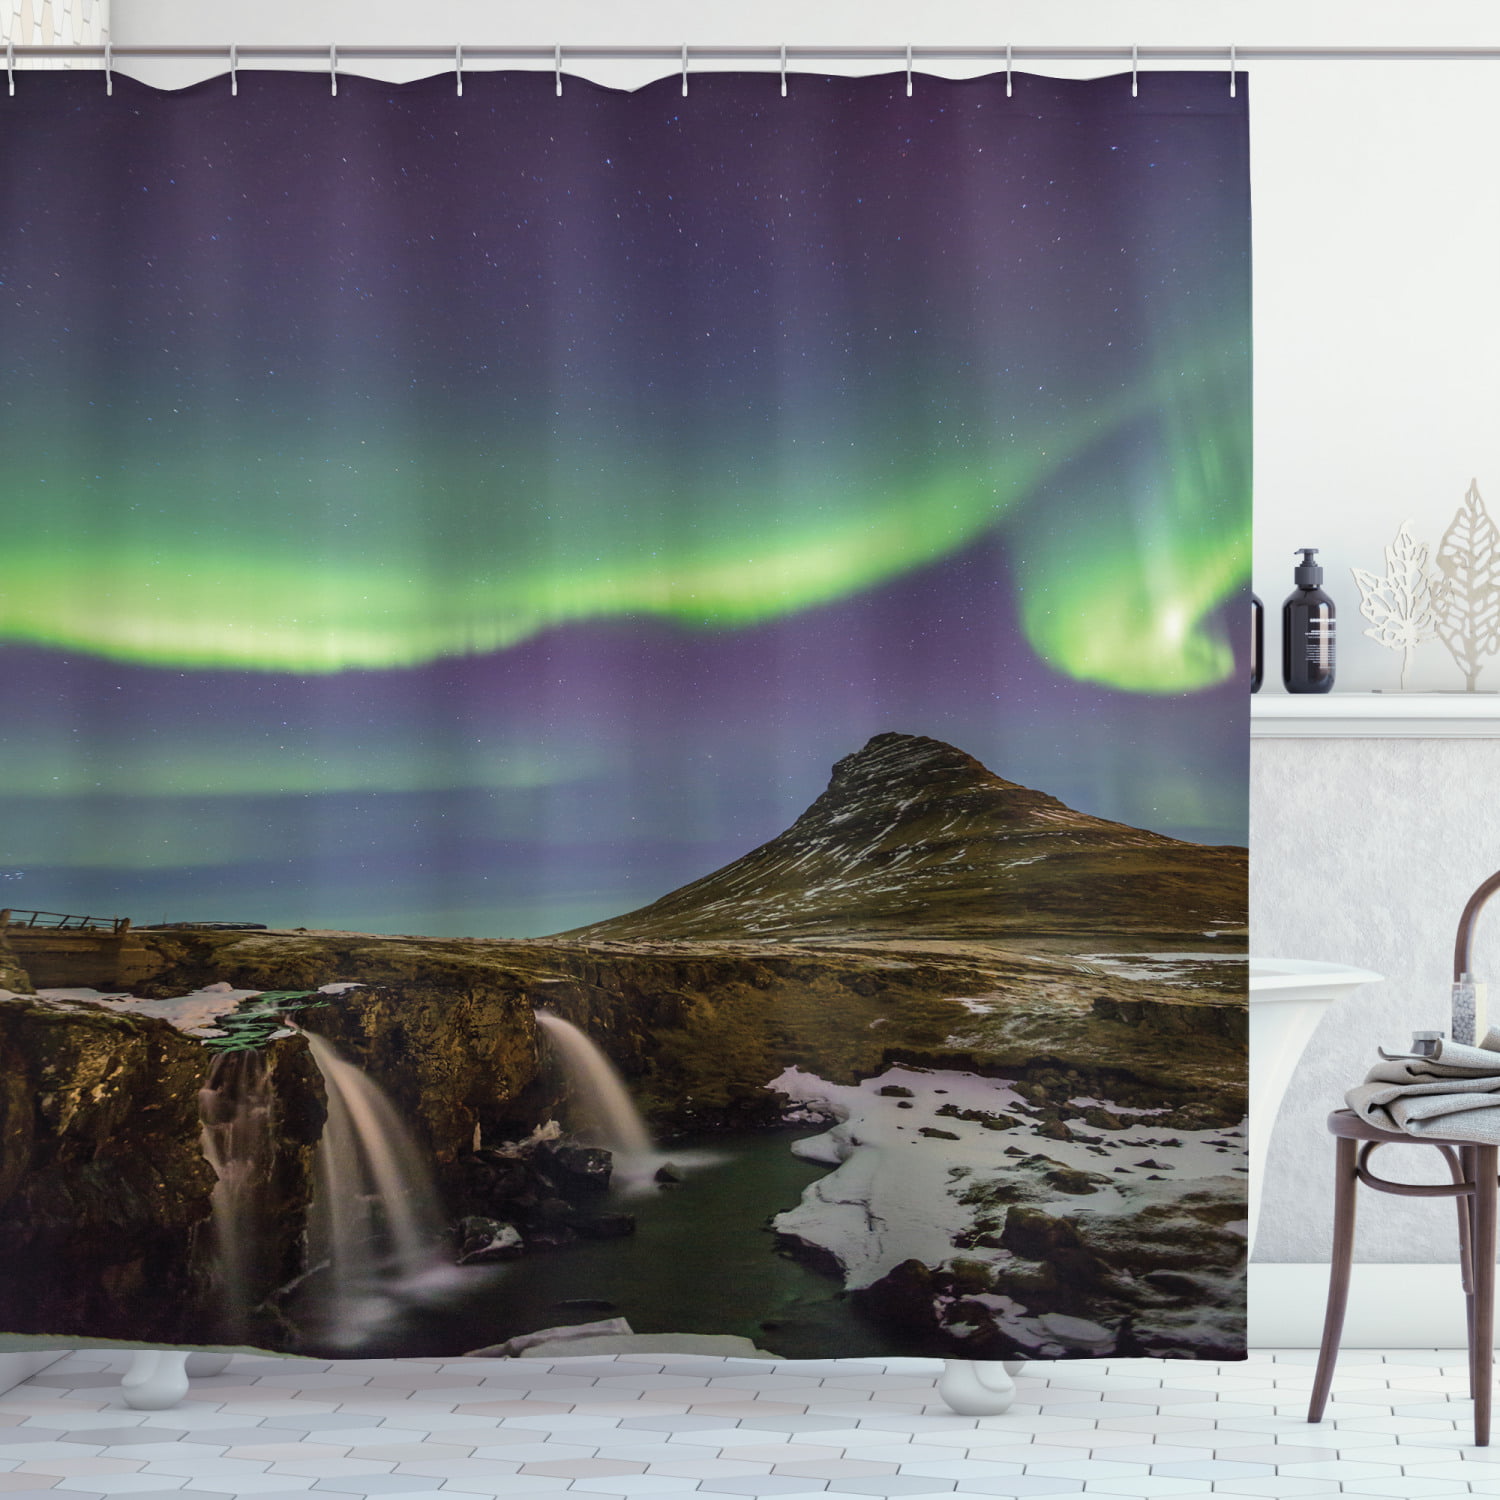 Aurora Borealis Shower Curtain Well, Aurora Borealis Shower Curtain